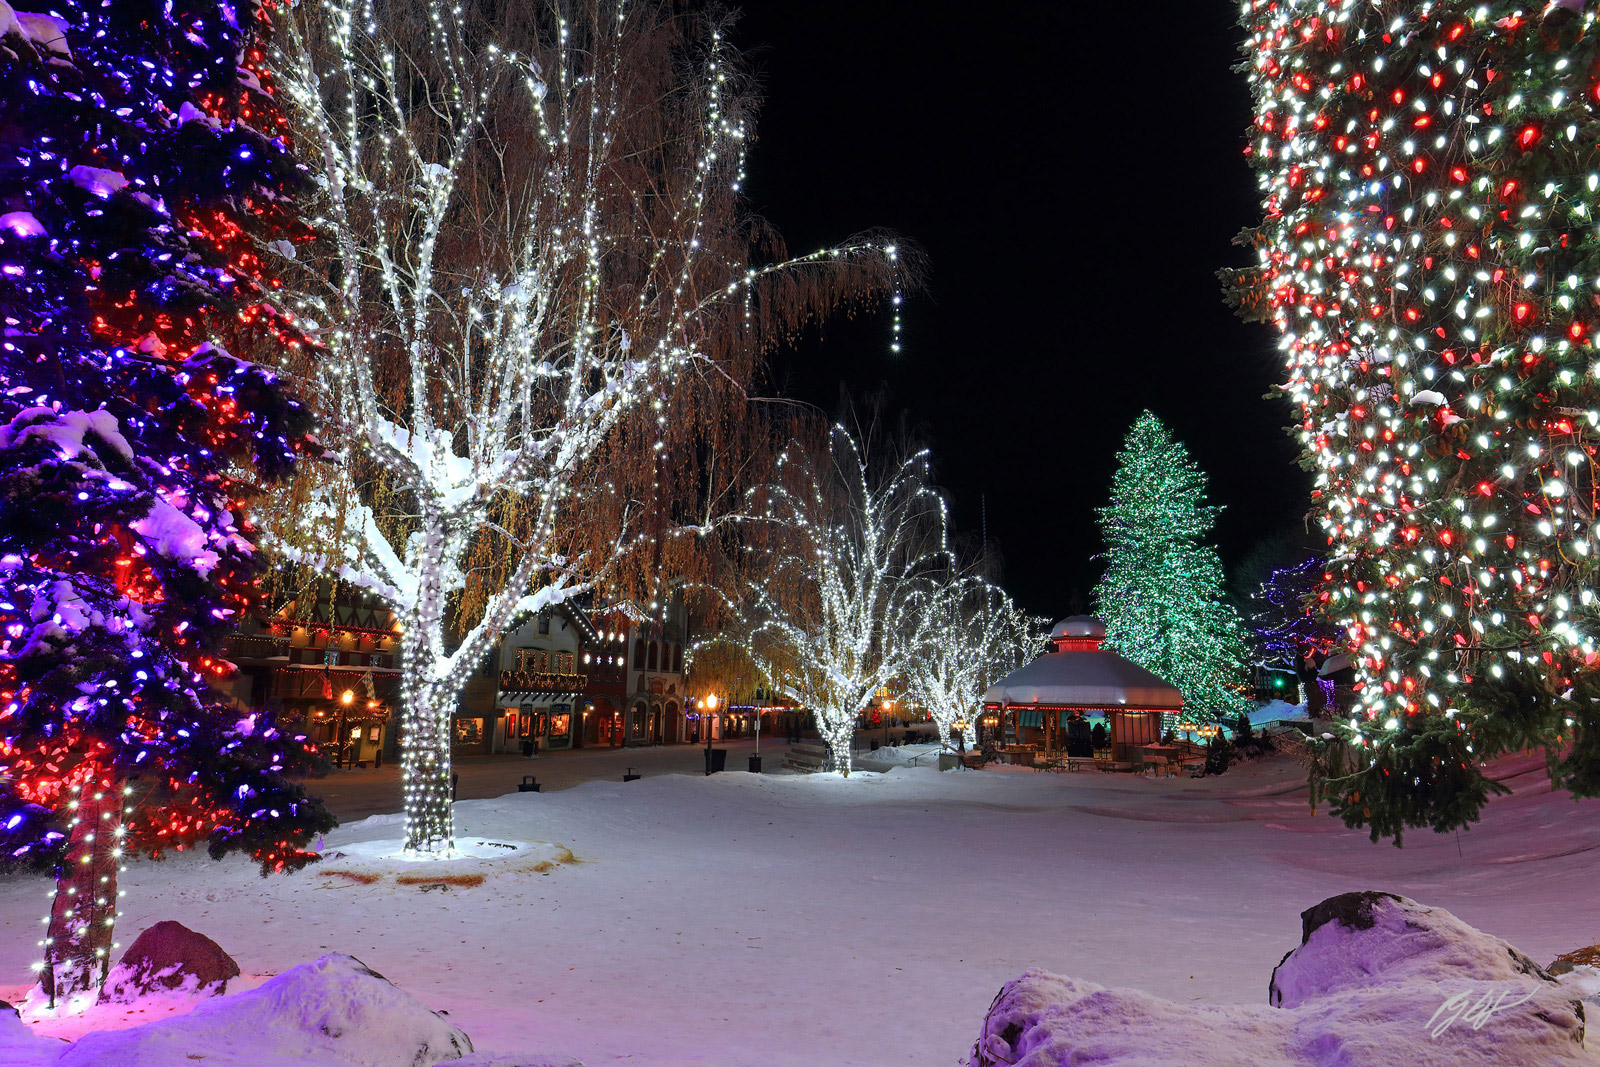 Holiday Lights on Display in Bavarian Village of Leavenworth in Washington